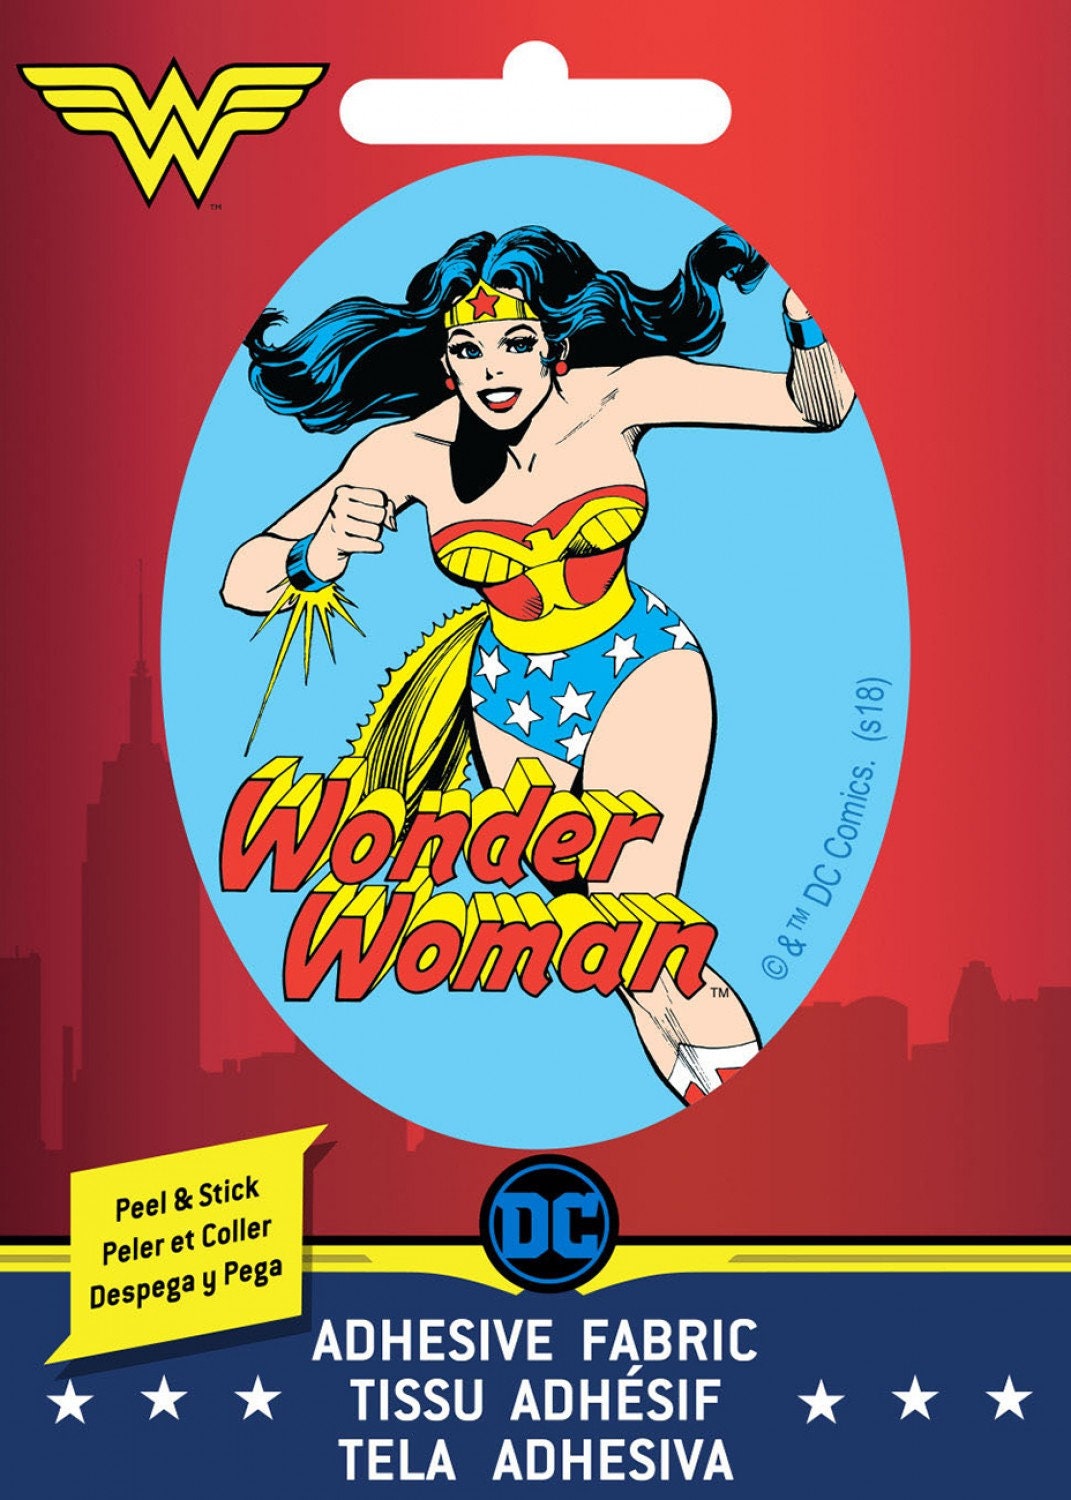 Ad Fab Adhesive Badge DC Comics Wonder Woman Adhesive Fabric 3" Badge 23400552X 100% Polyester